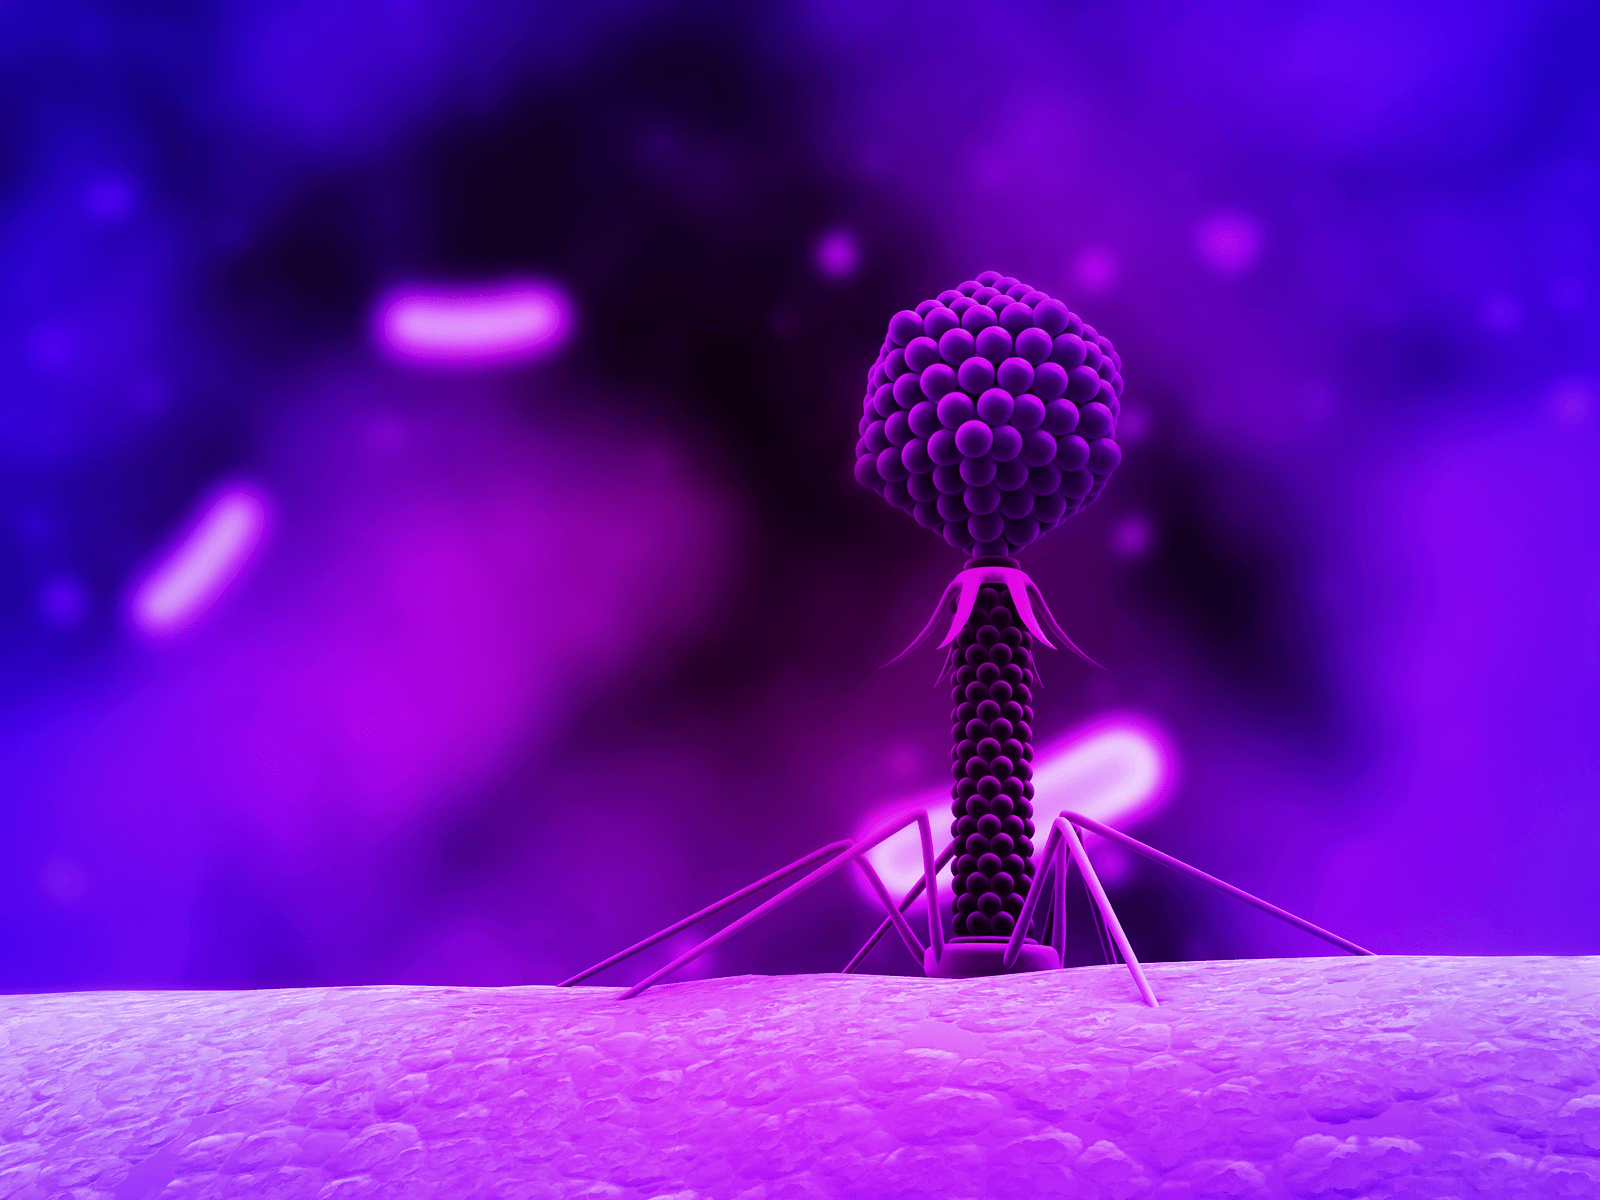 Bacteriophage Virus My Favorite. This Virus Is Not Just Amazing To